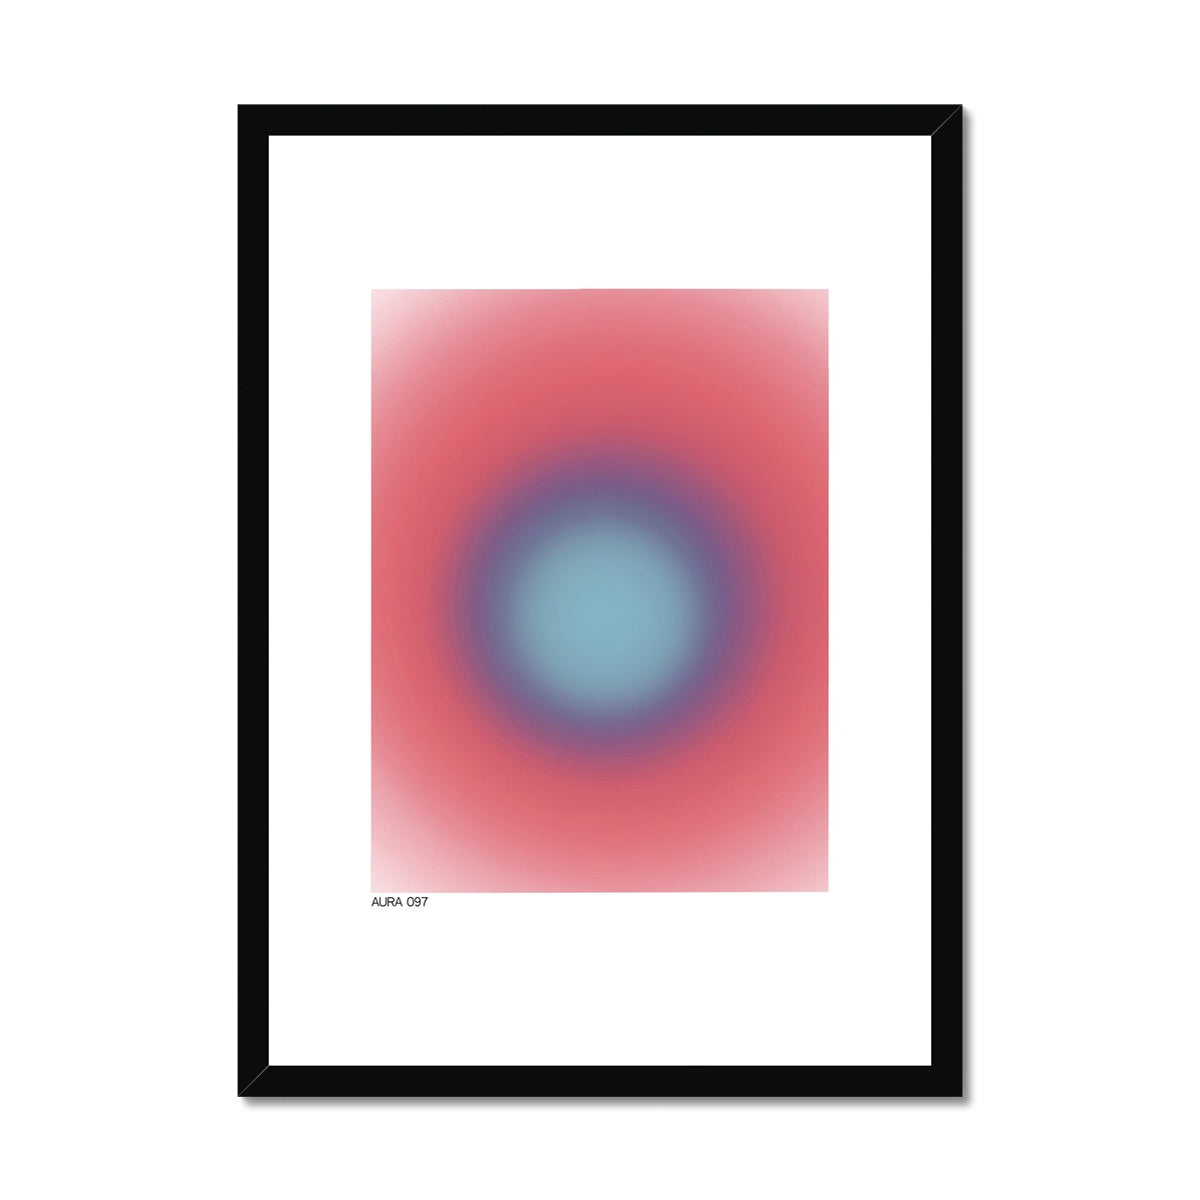 aura 097 Framed & Mounted Print